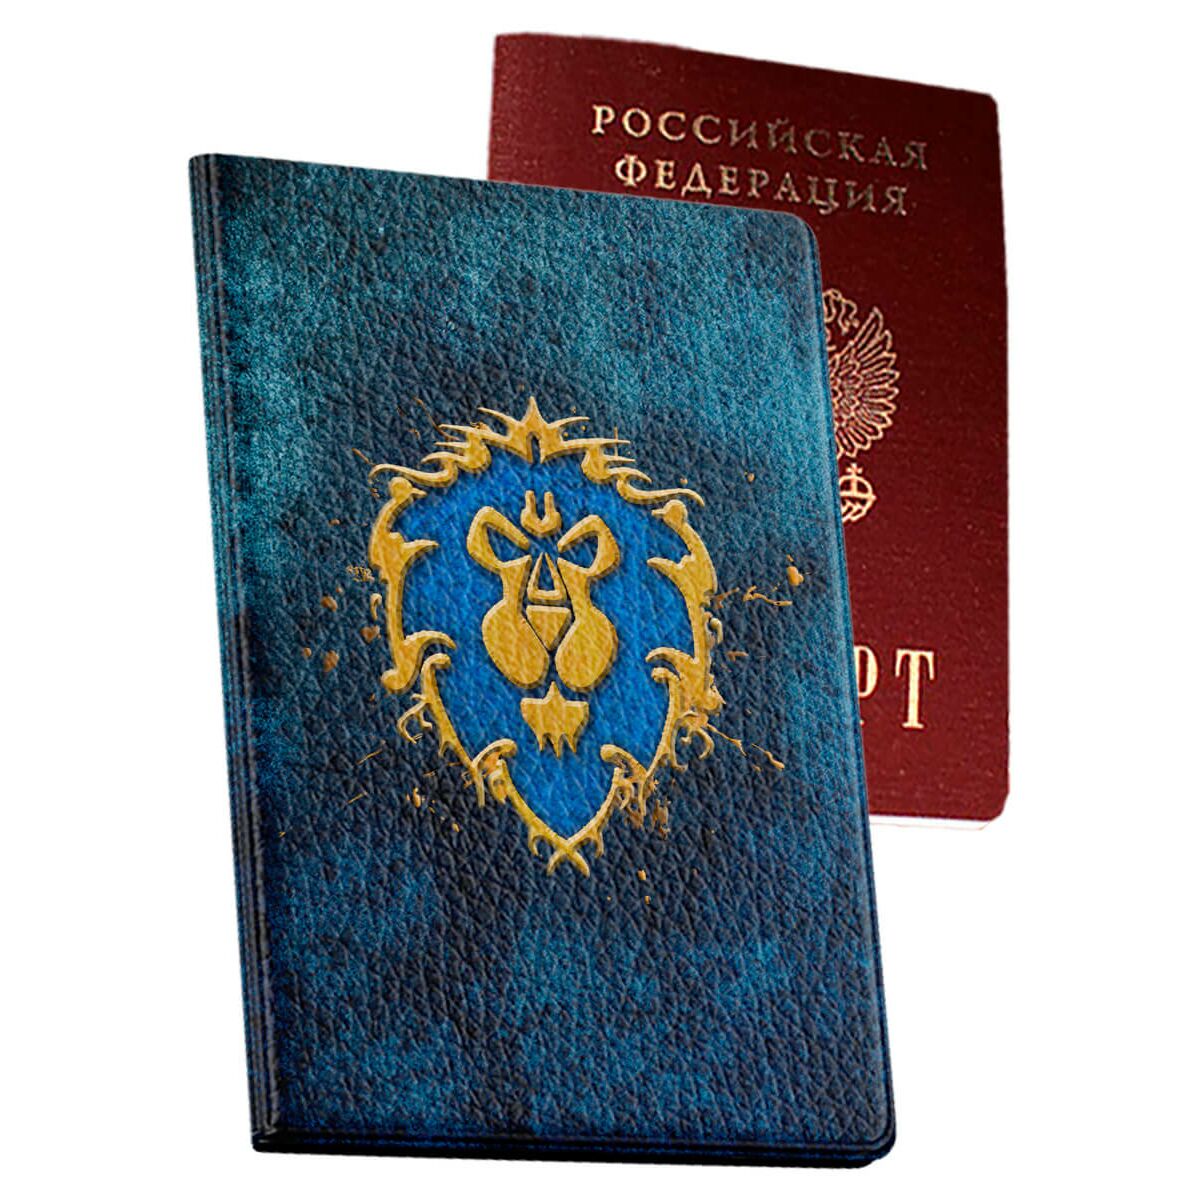 обложка на паспорт дота 2 фото 21